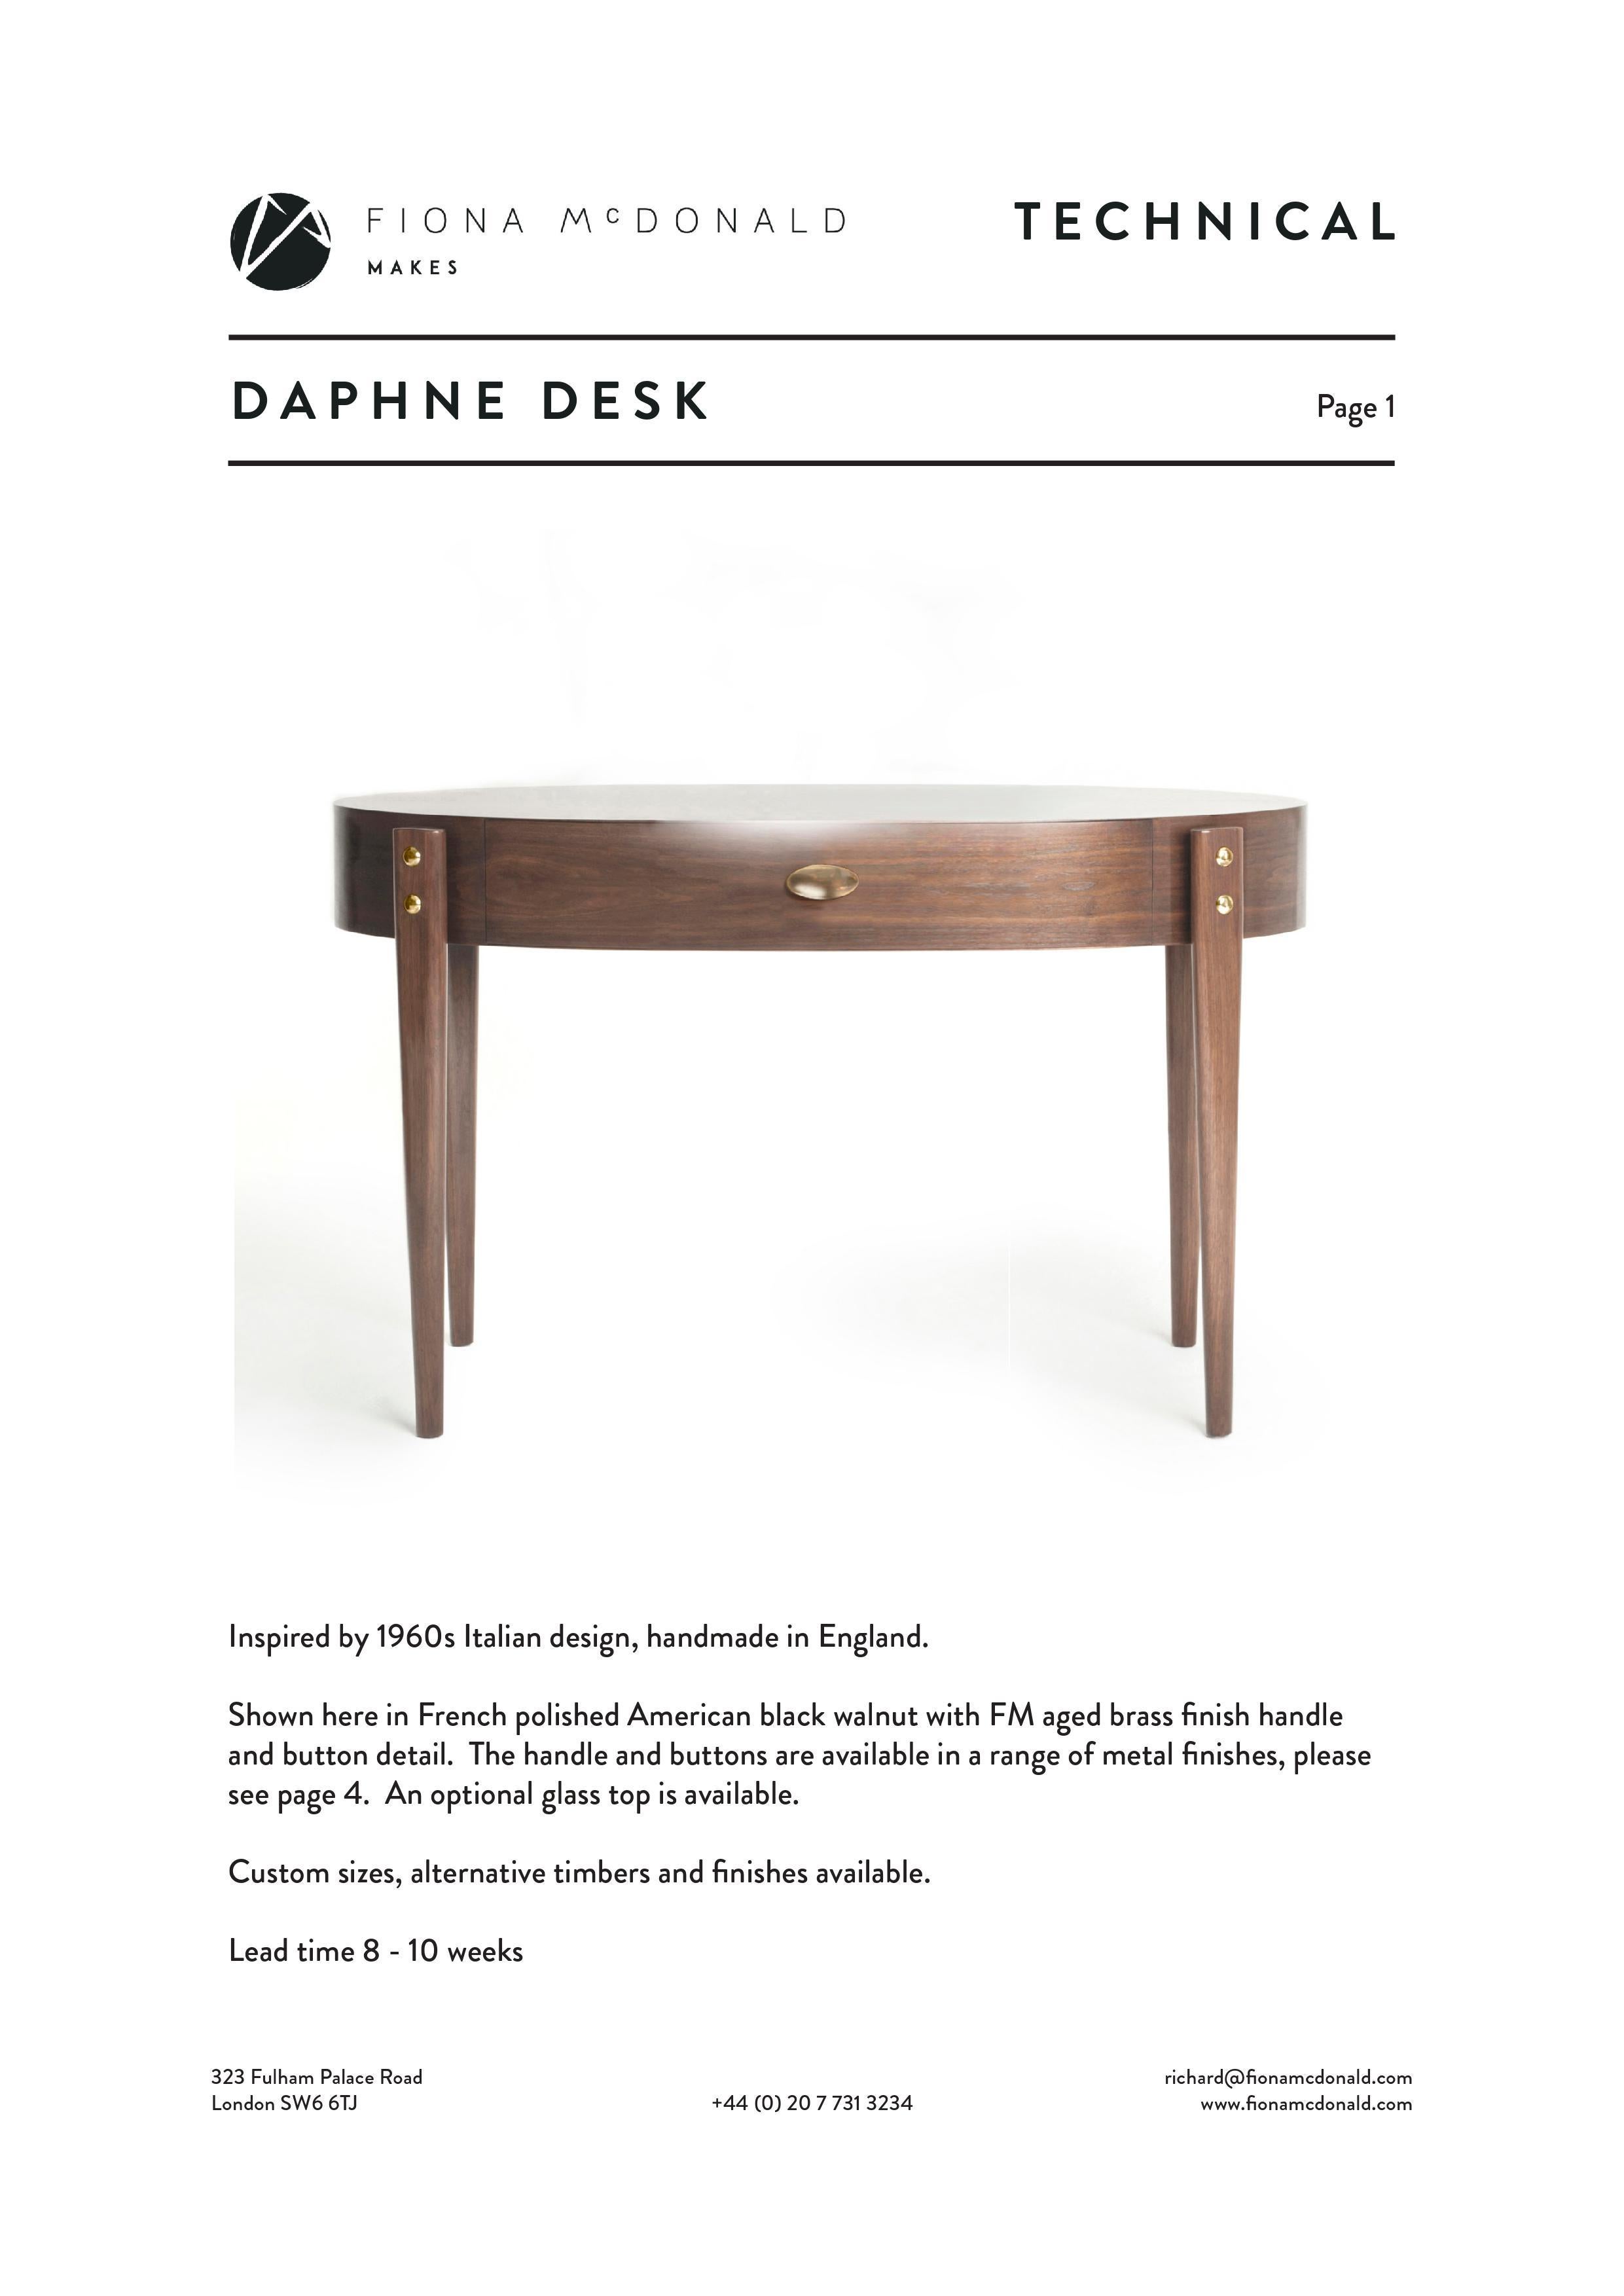 Cast Daphne Desk or Table - Bespoke - shown in Walnut, Antique Silver Handles For Sale